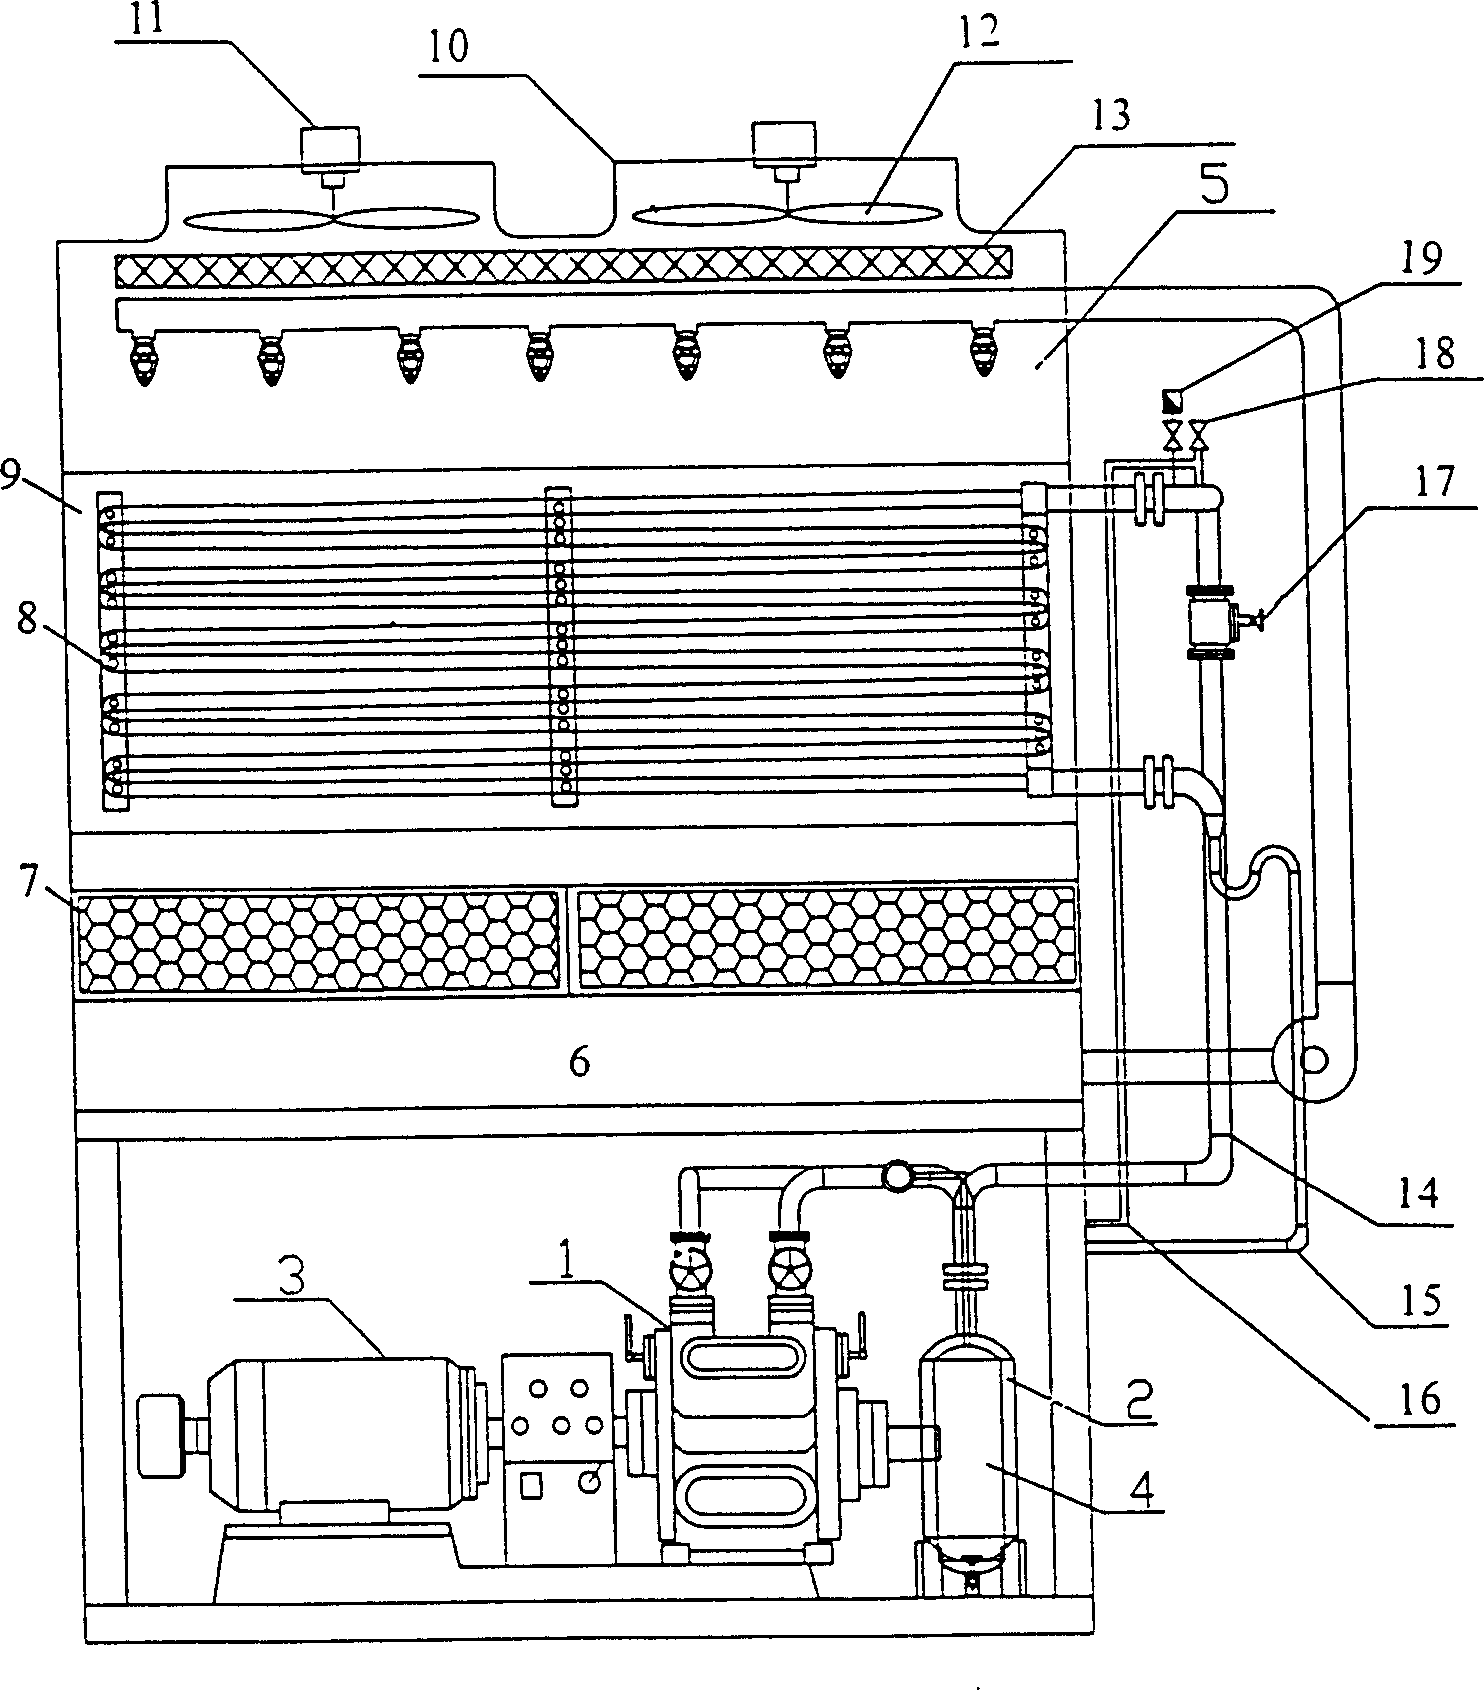 Condenser set of evaporated compressor